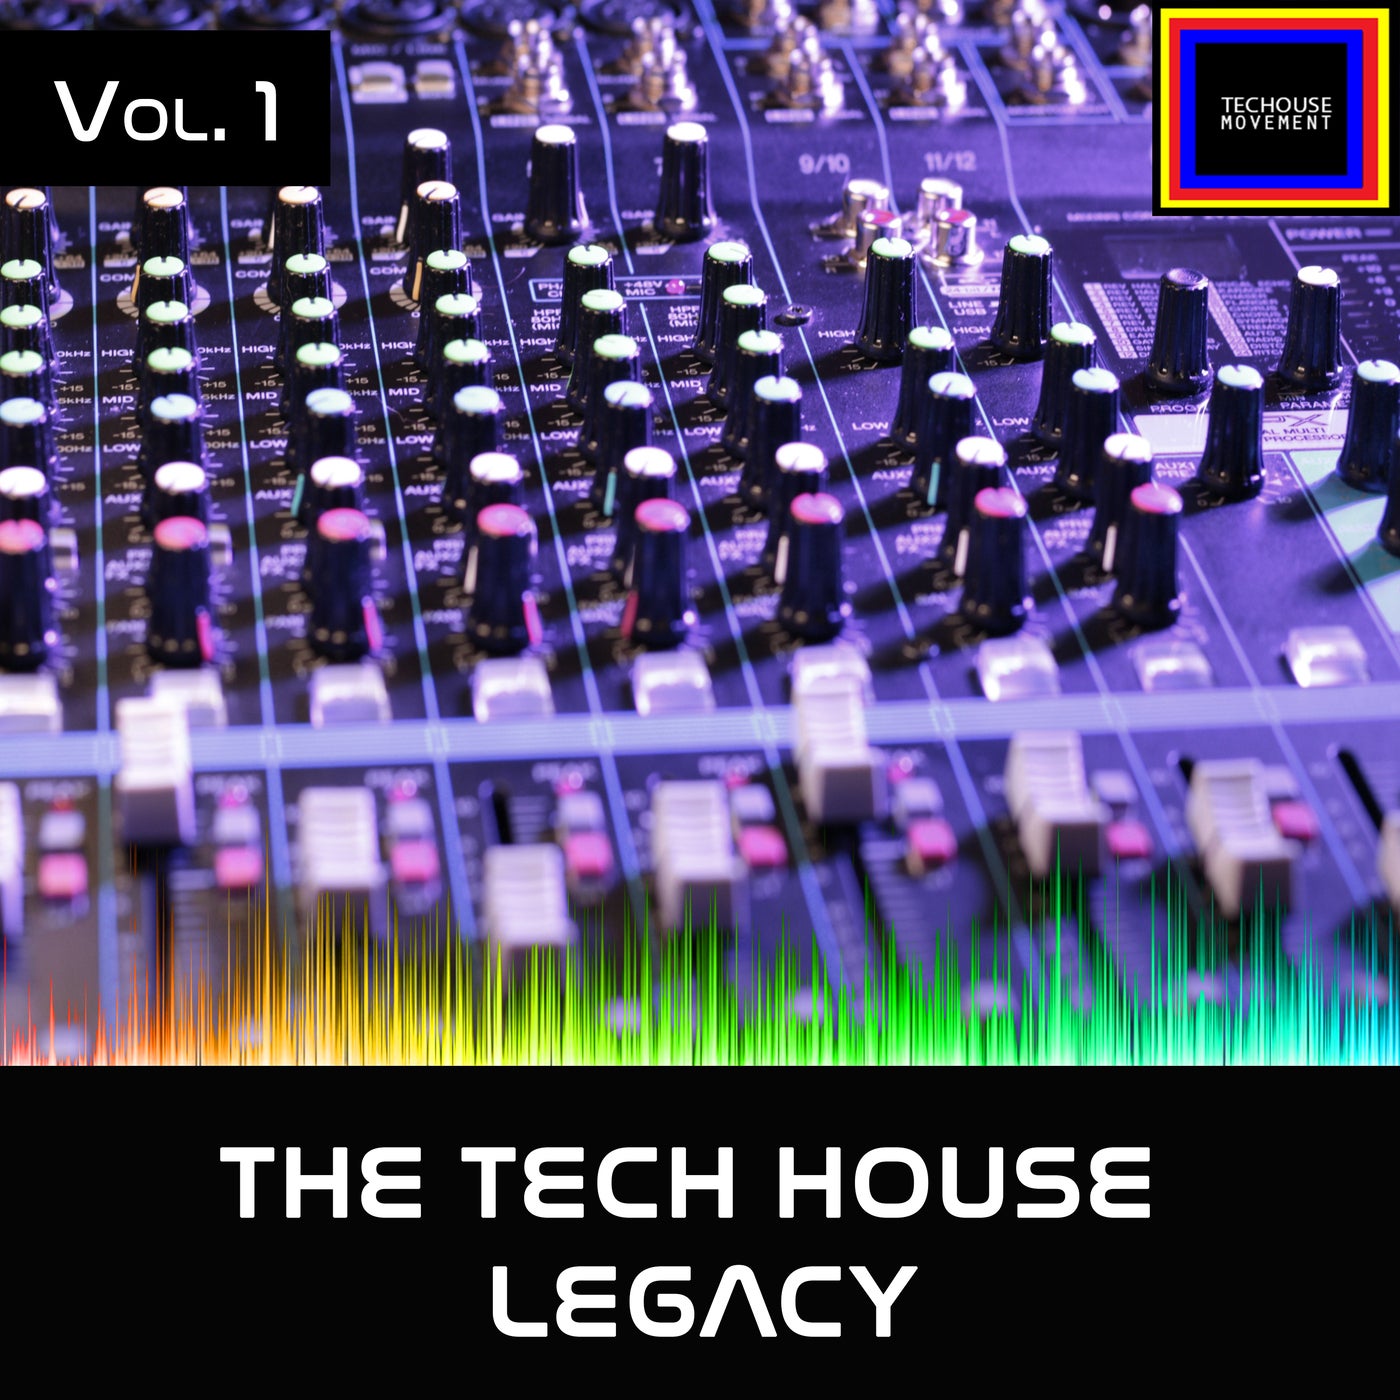 The Tech House Legacy, Vol. 1